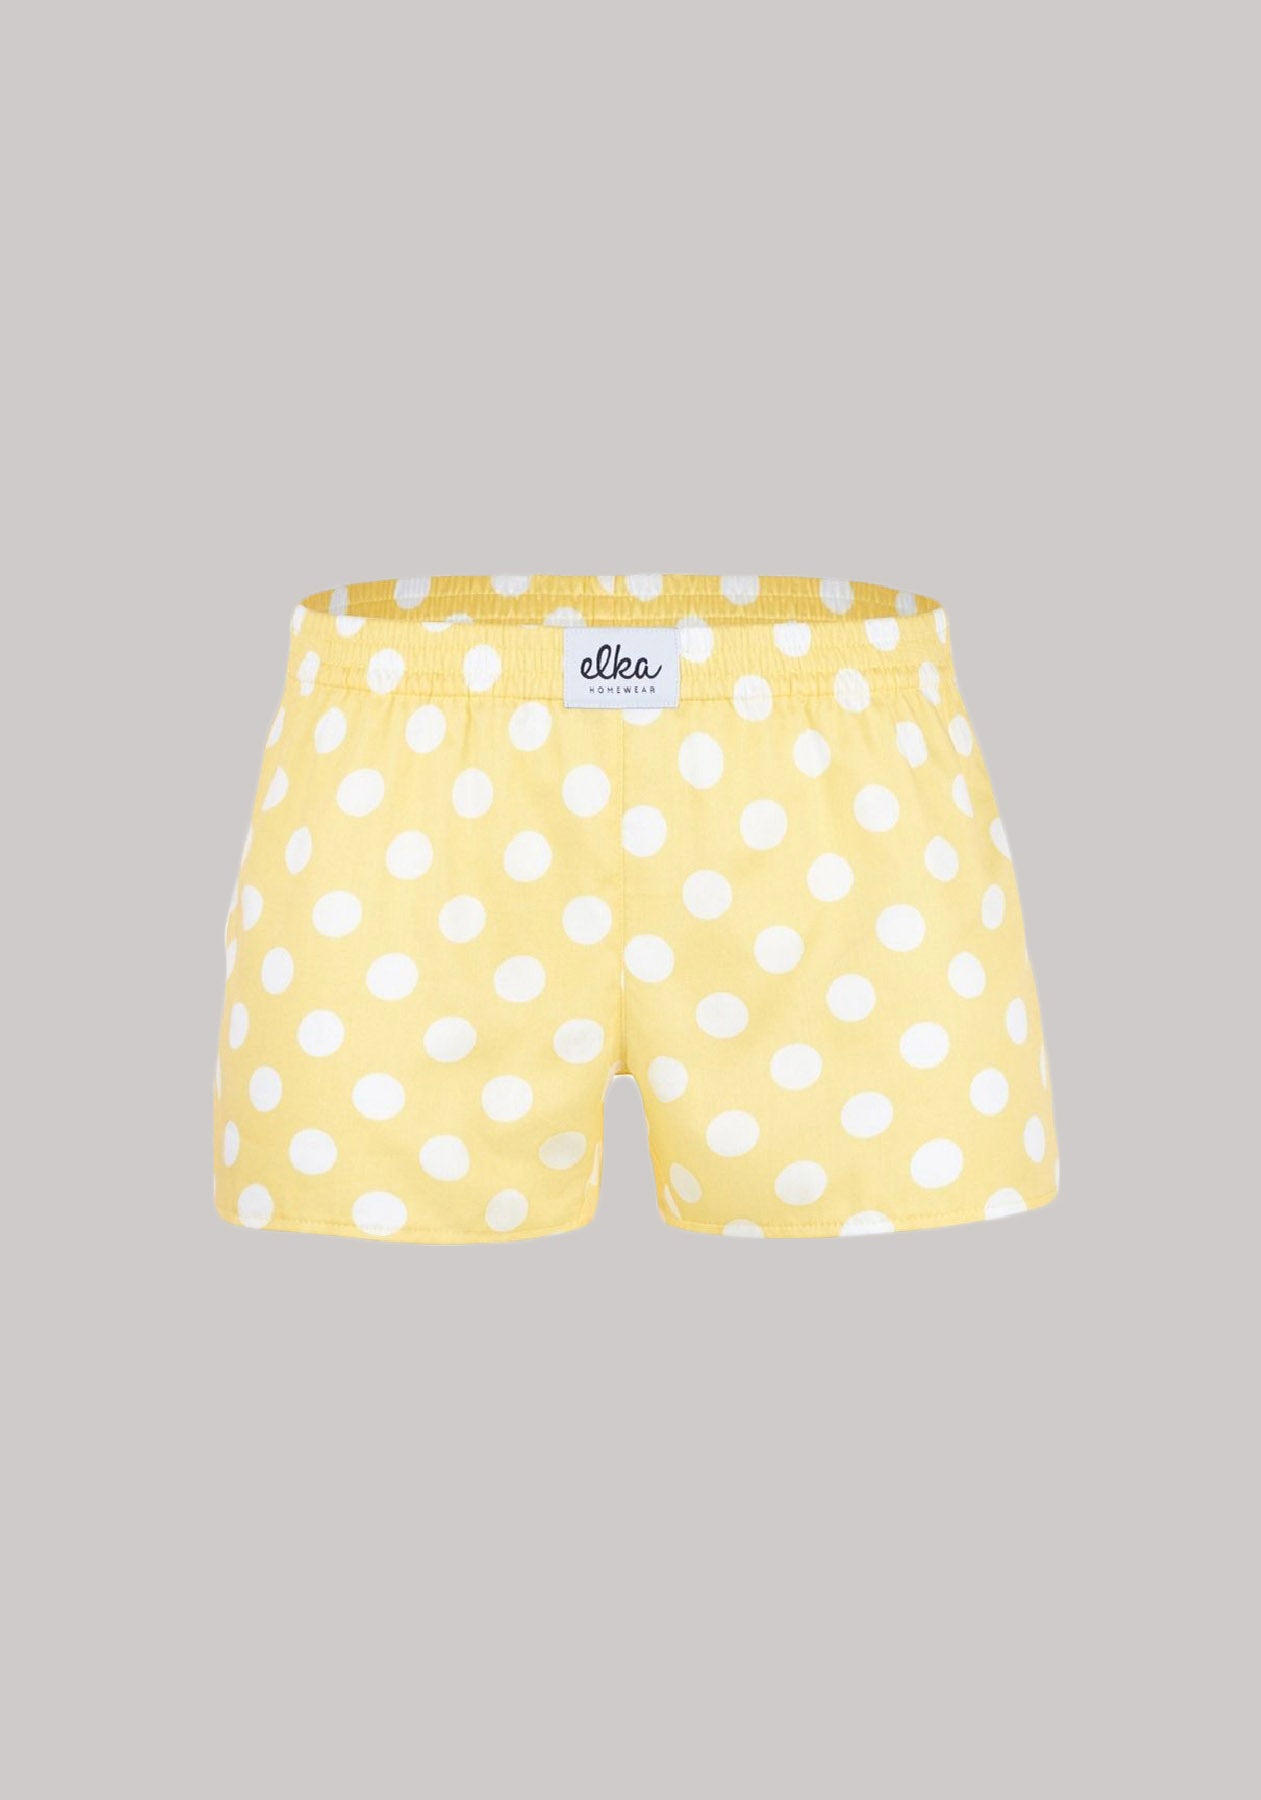 Women's shorts Yellow with big polka dots